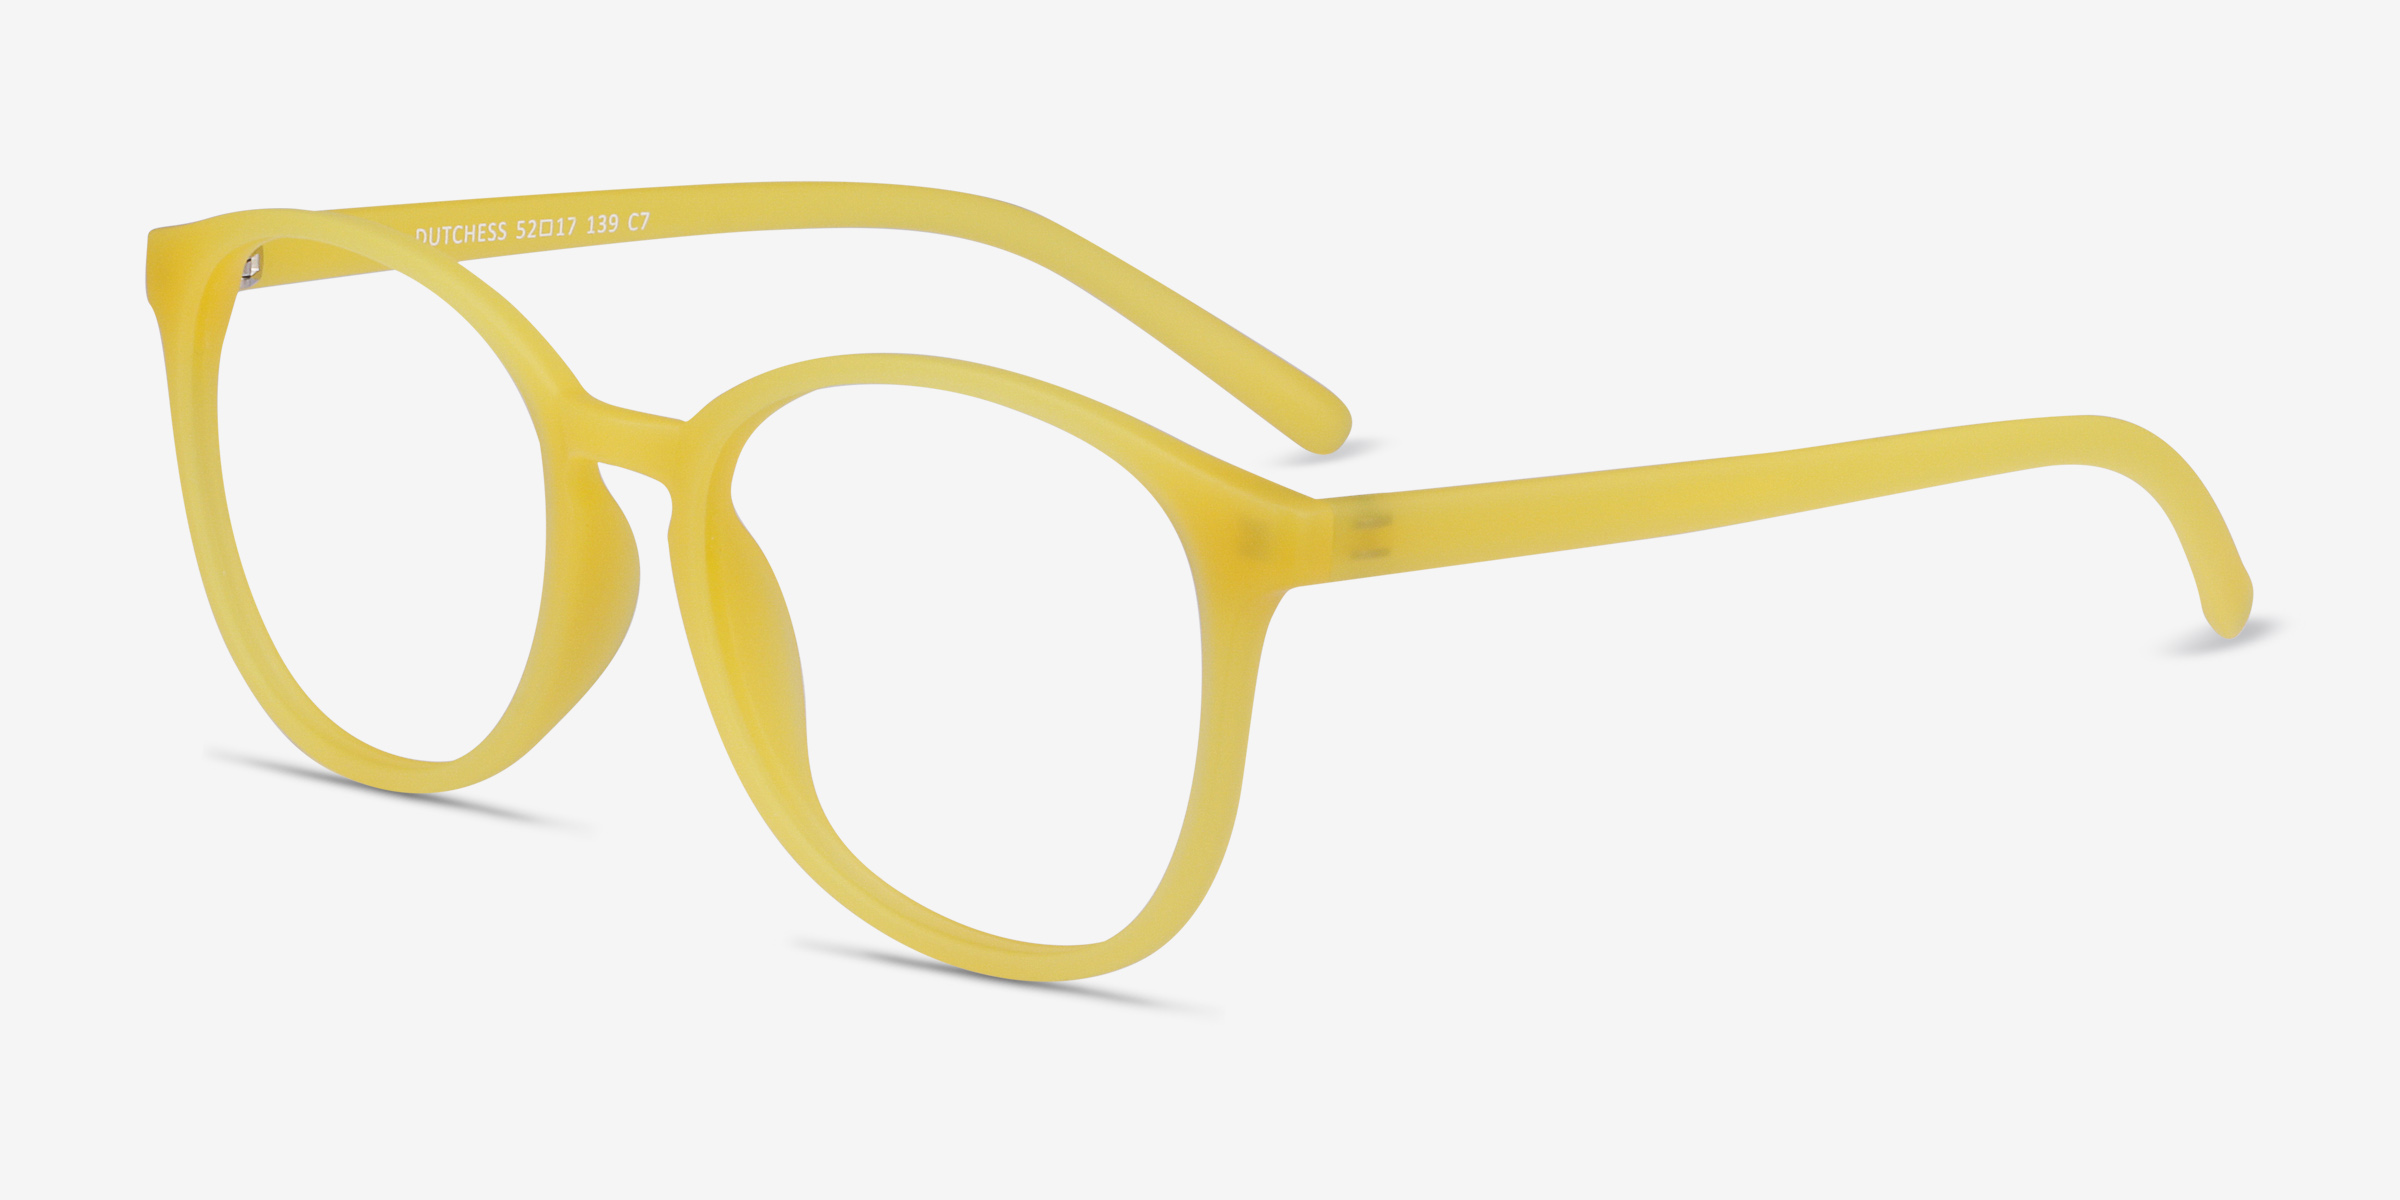 Dutchess Round Yellow Frame Eyeglasses Eyebuydirect